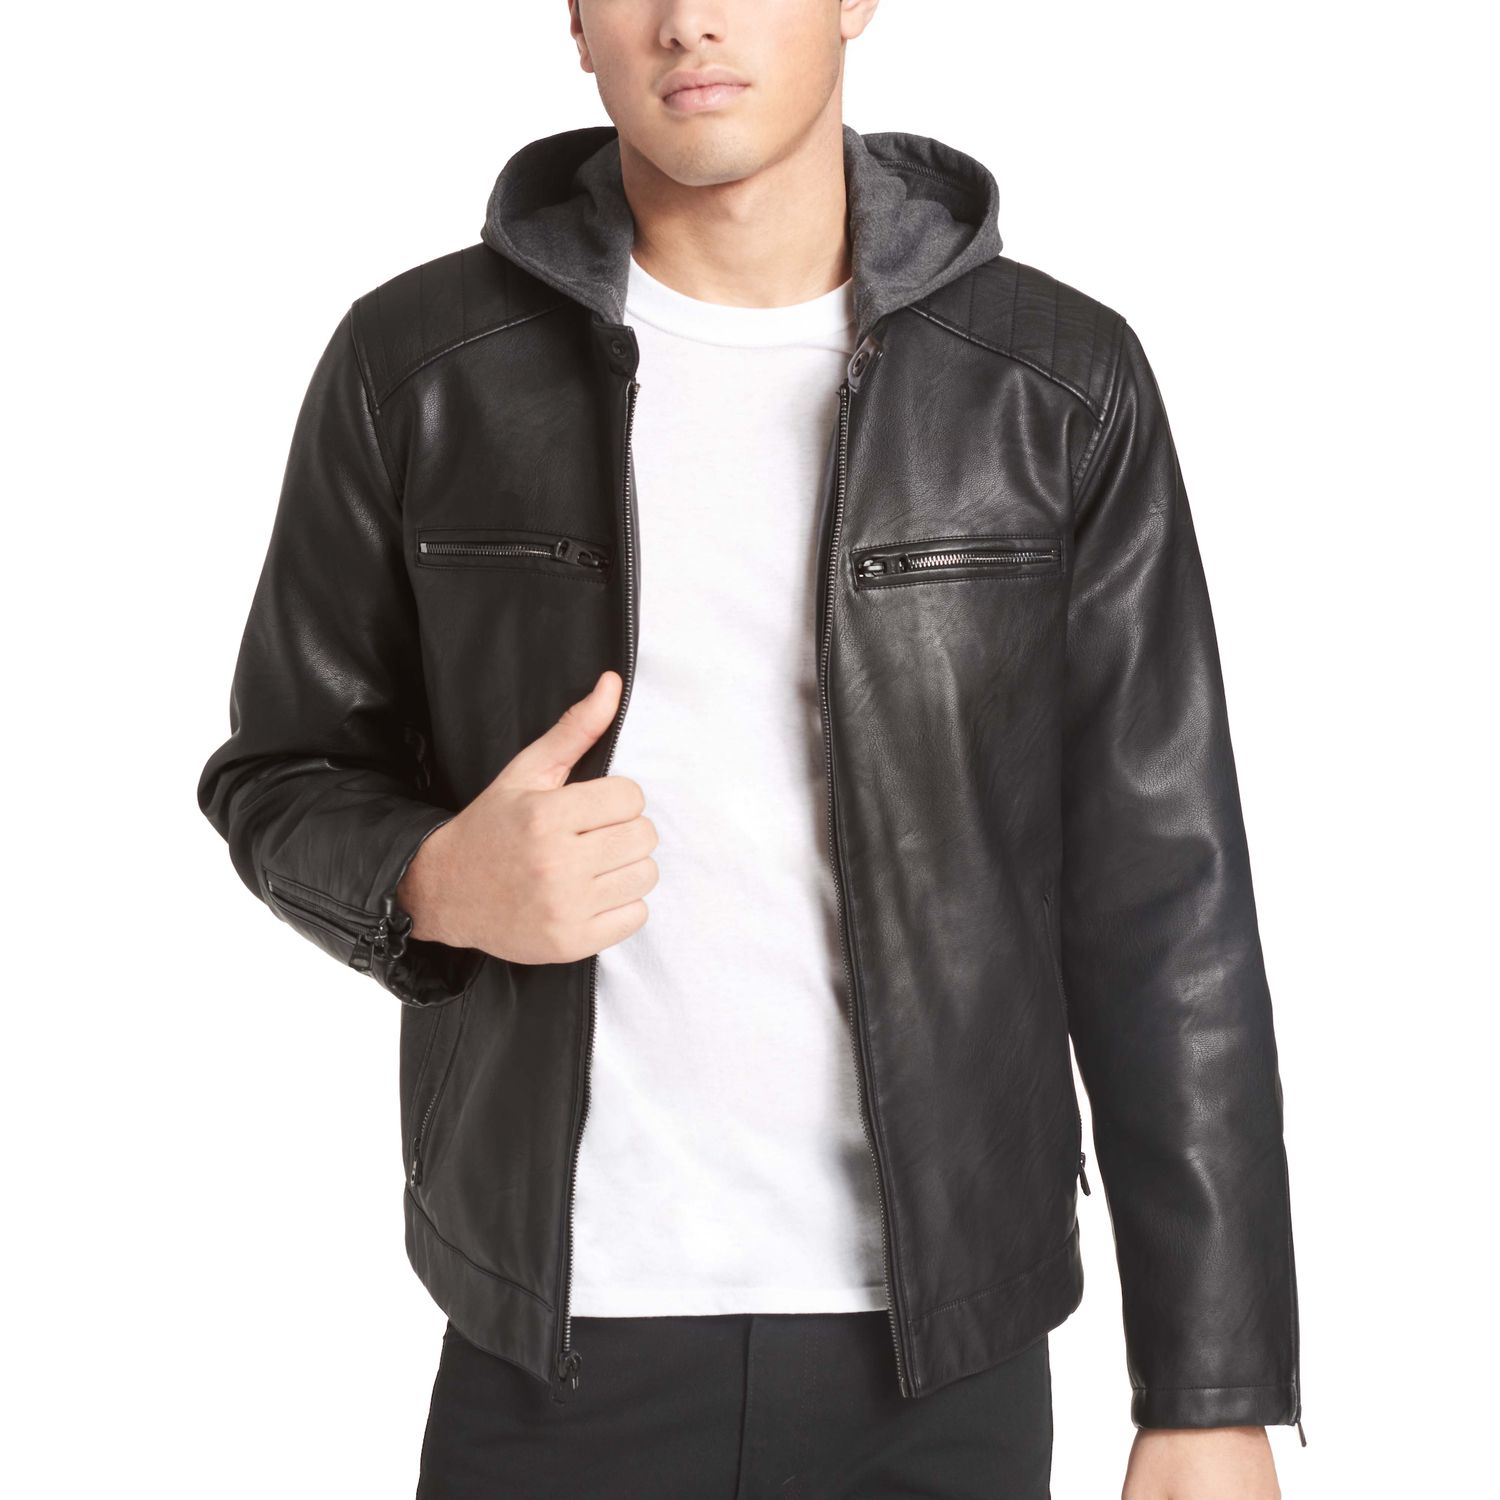 Kohl's Levi Leather Jacket Sale, SAVE 57%.